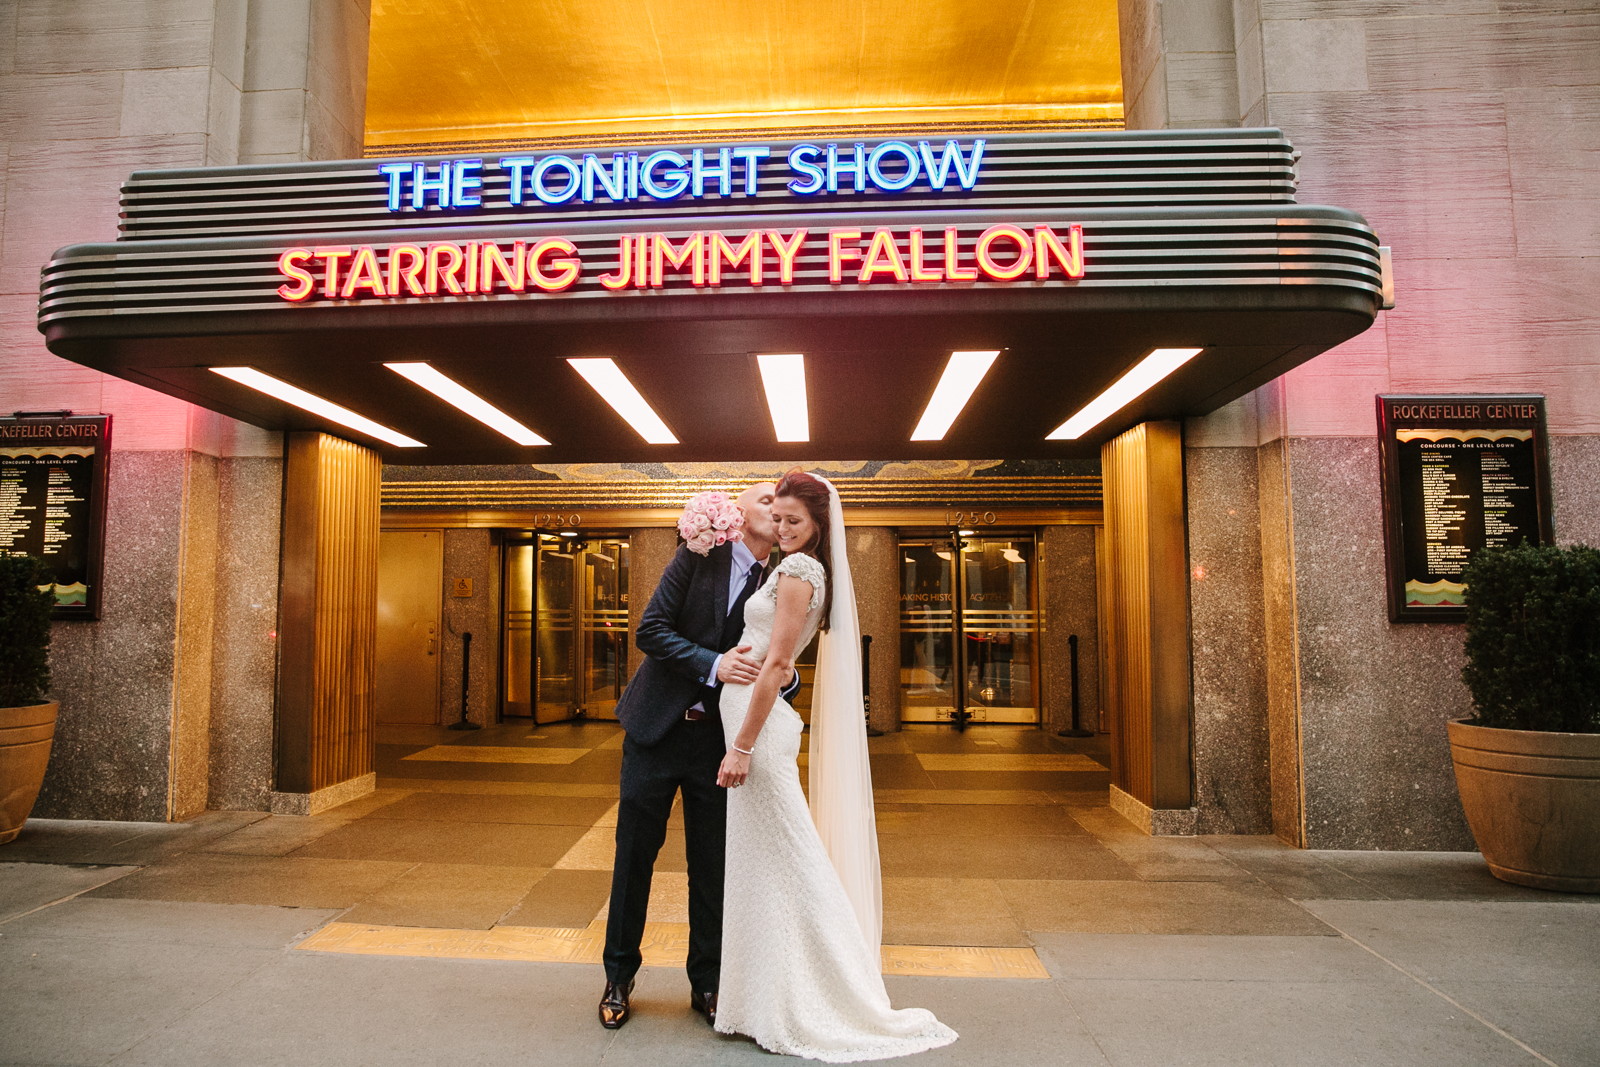 NYC-wedding-photos-by-Tanya-Isaeva-3.jpg